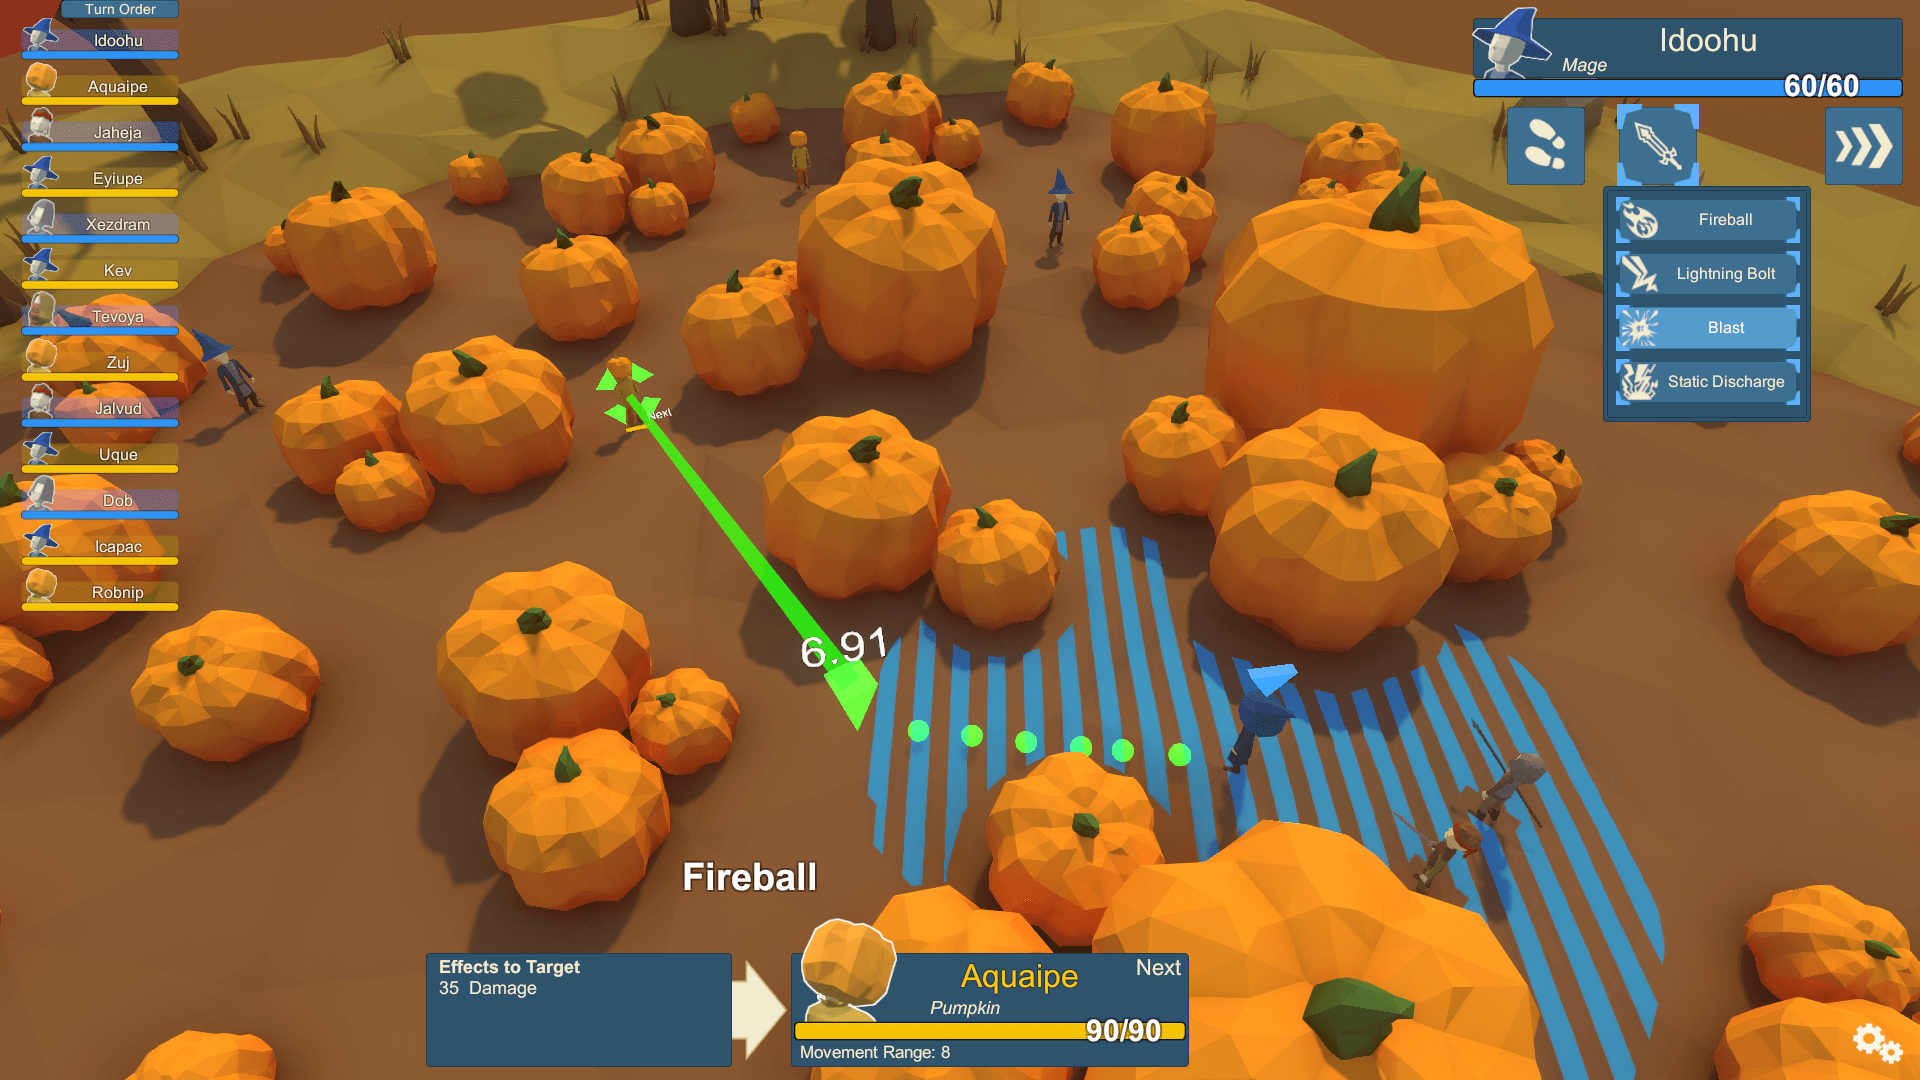 Battle in the Pumpkin Patch